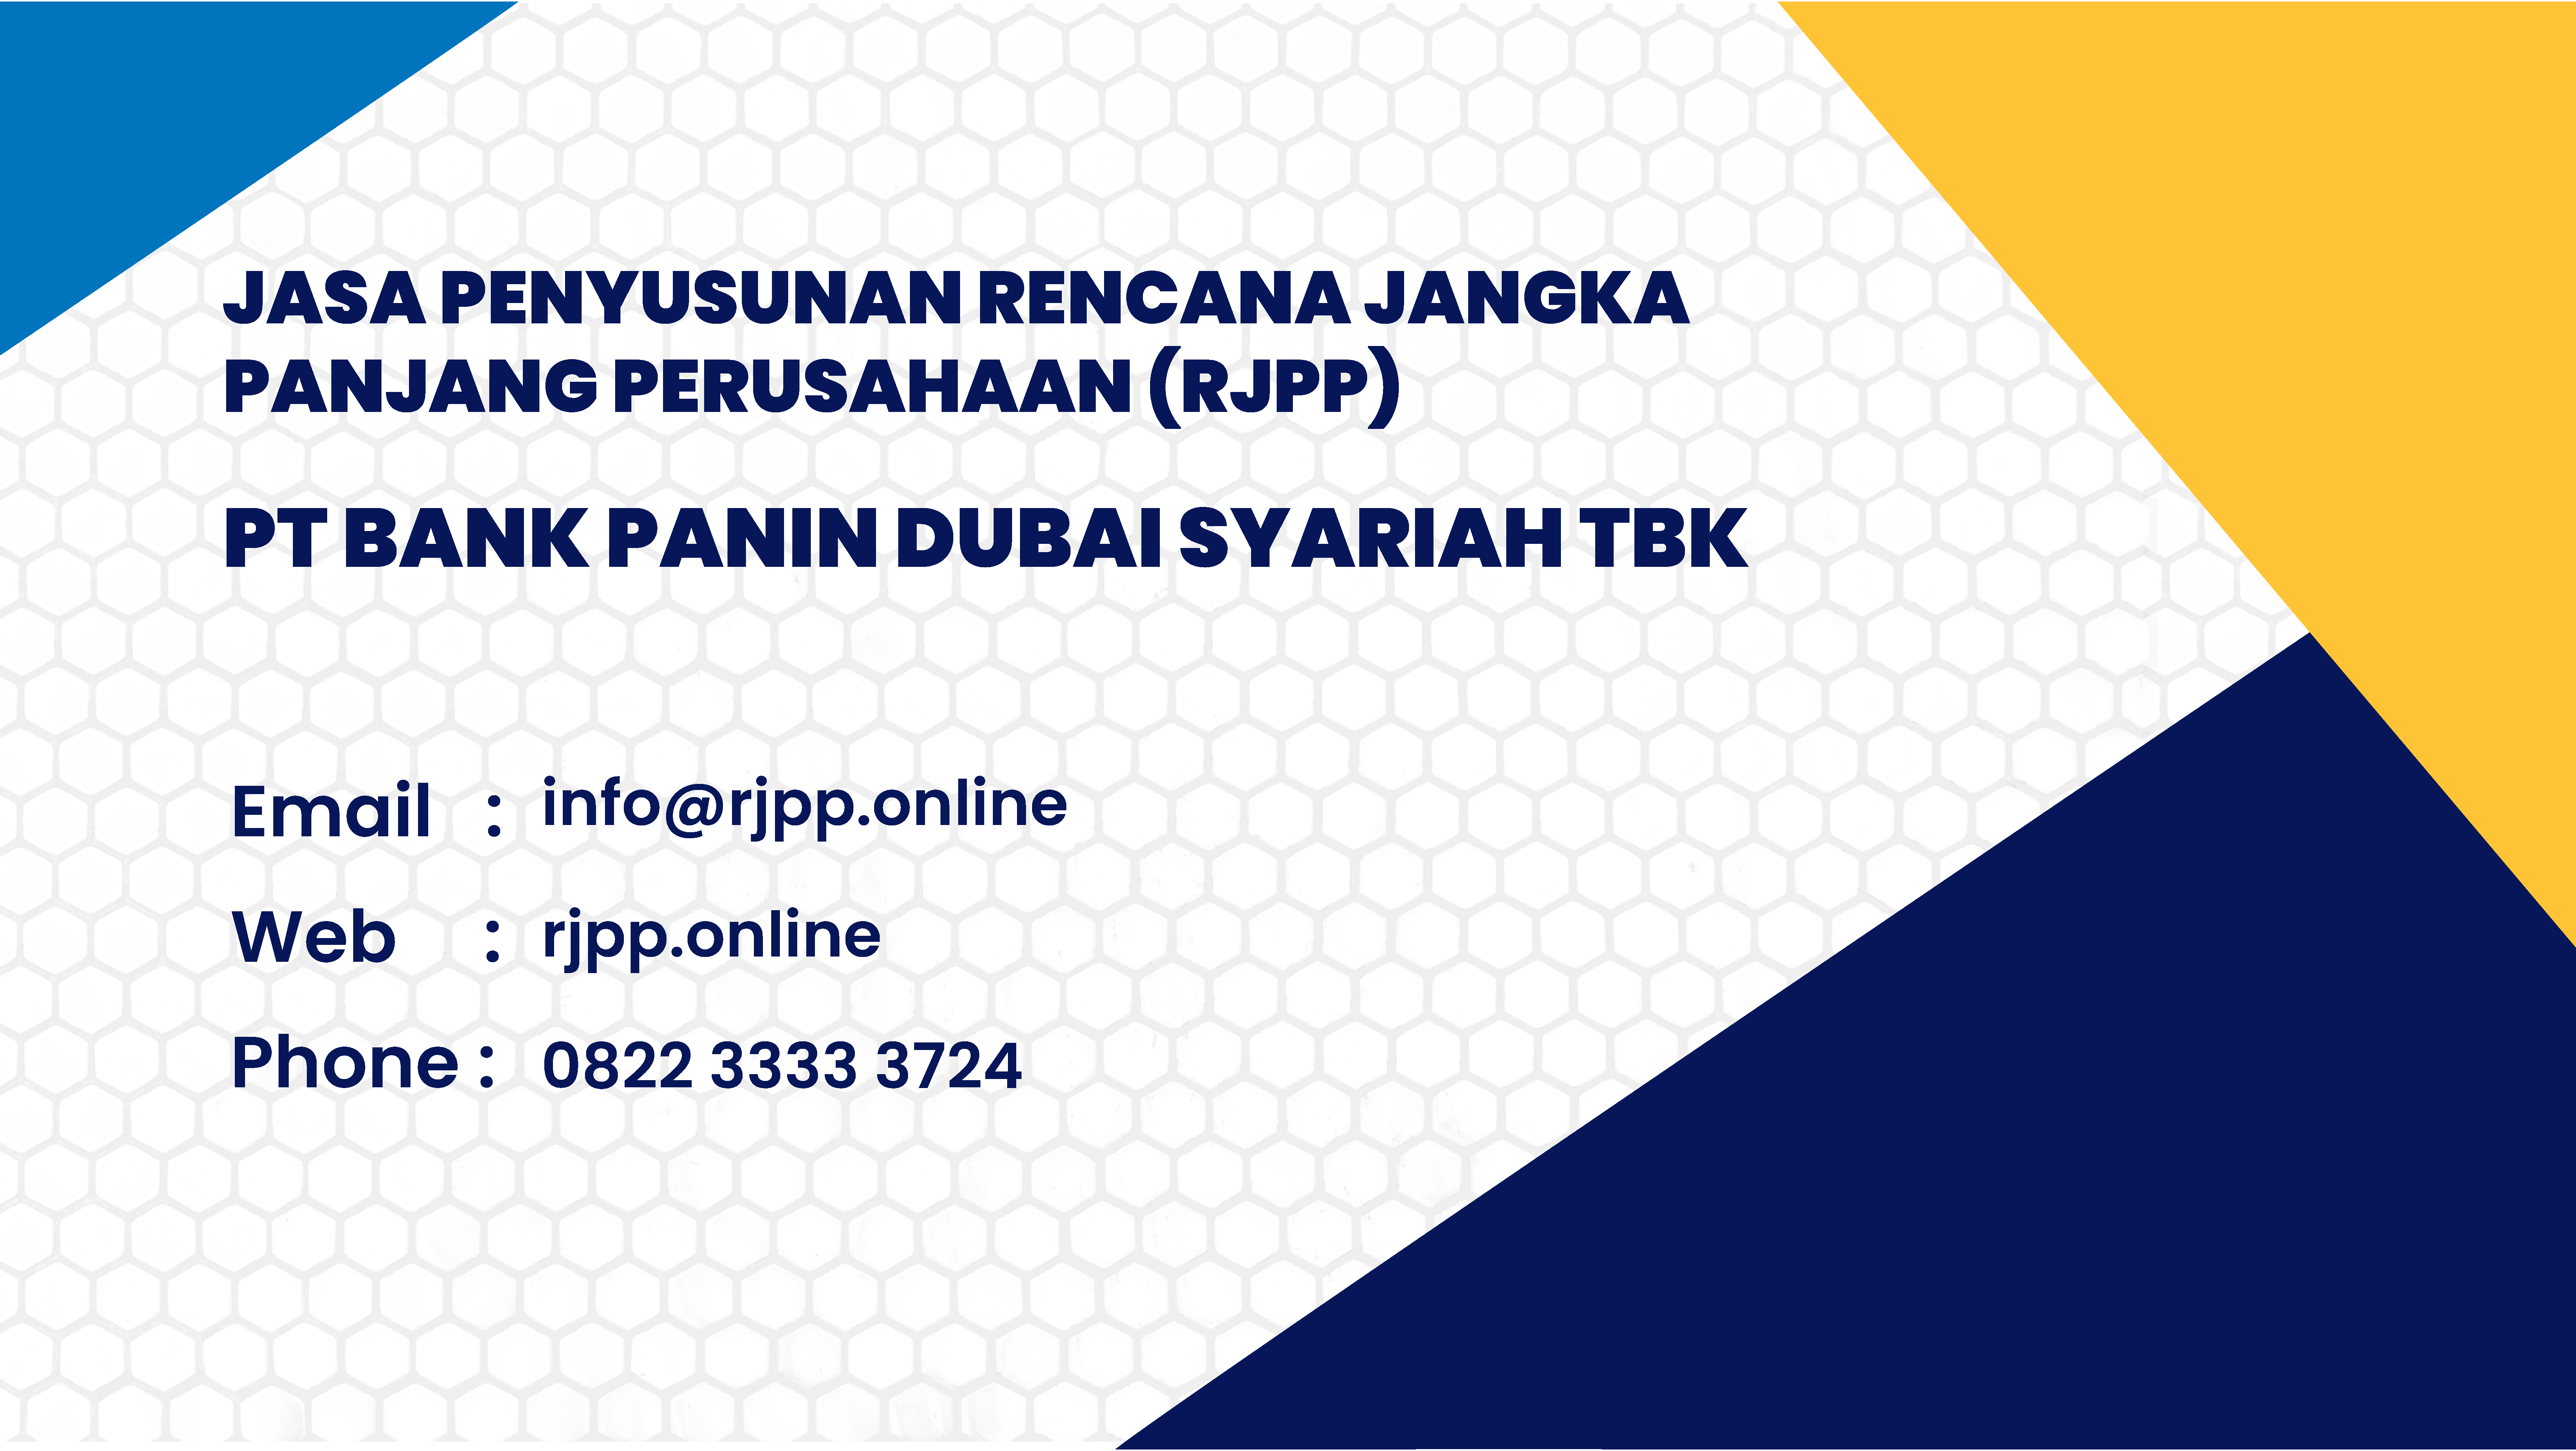 RJPP Bank Panin Dubai Syariah